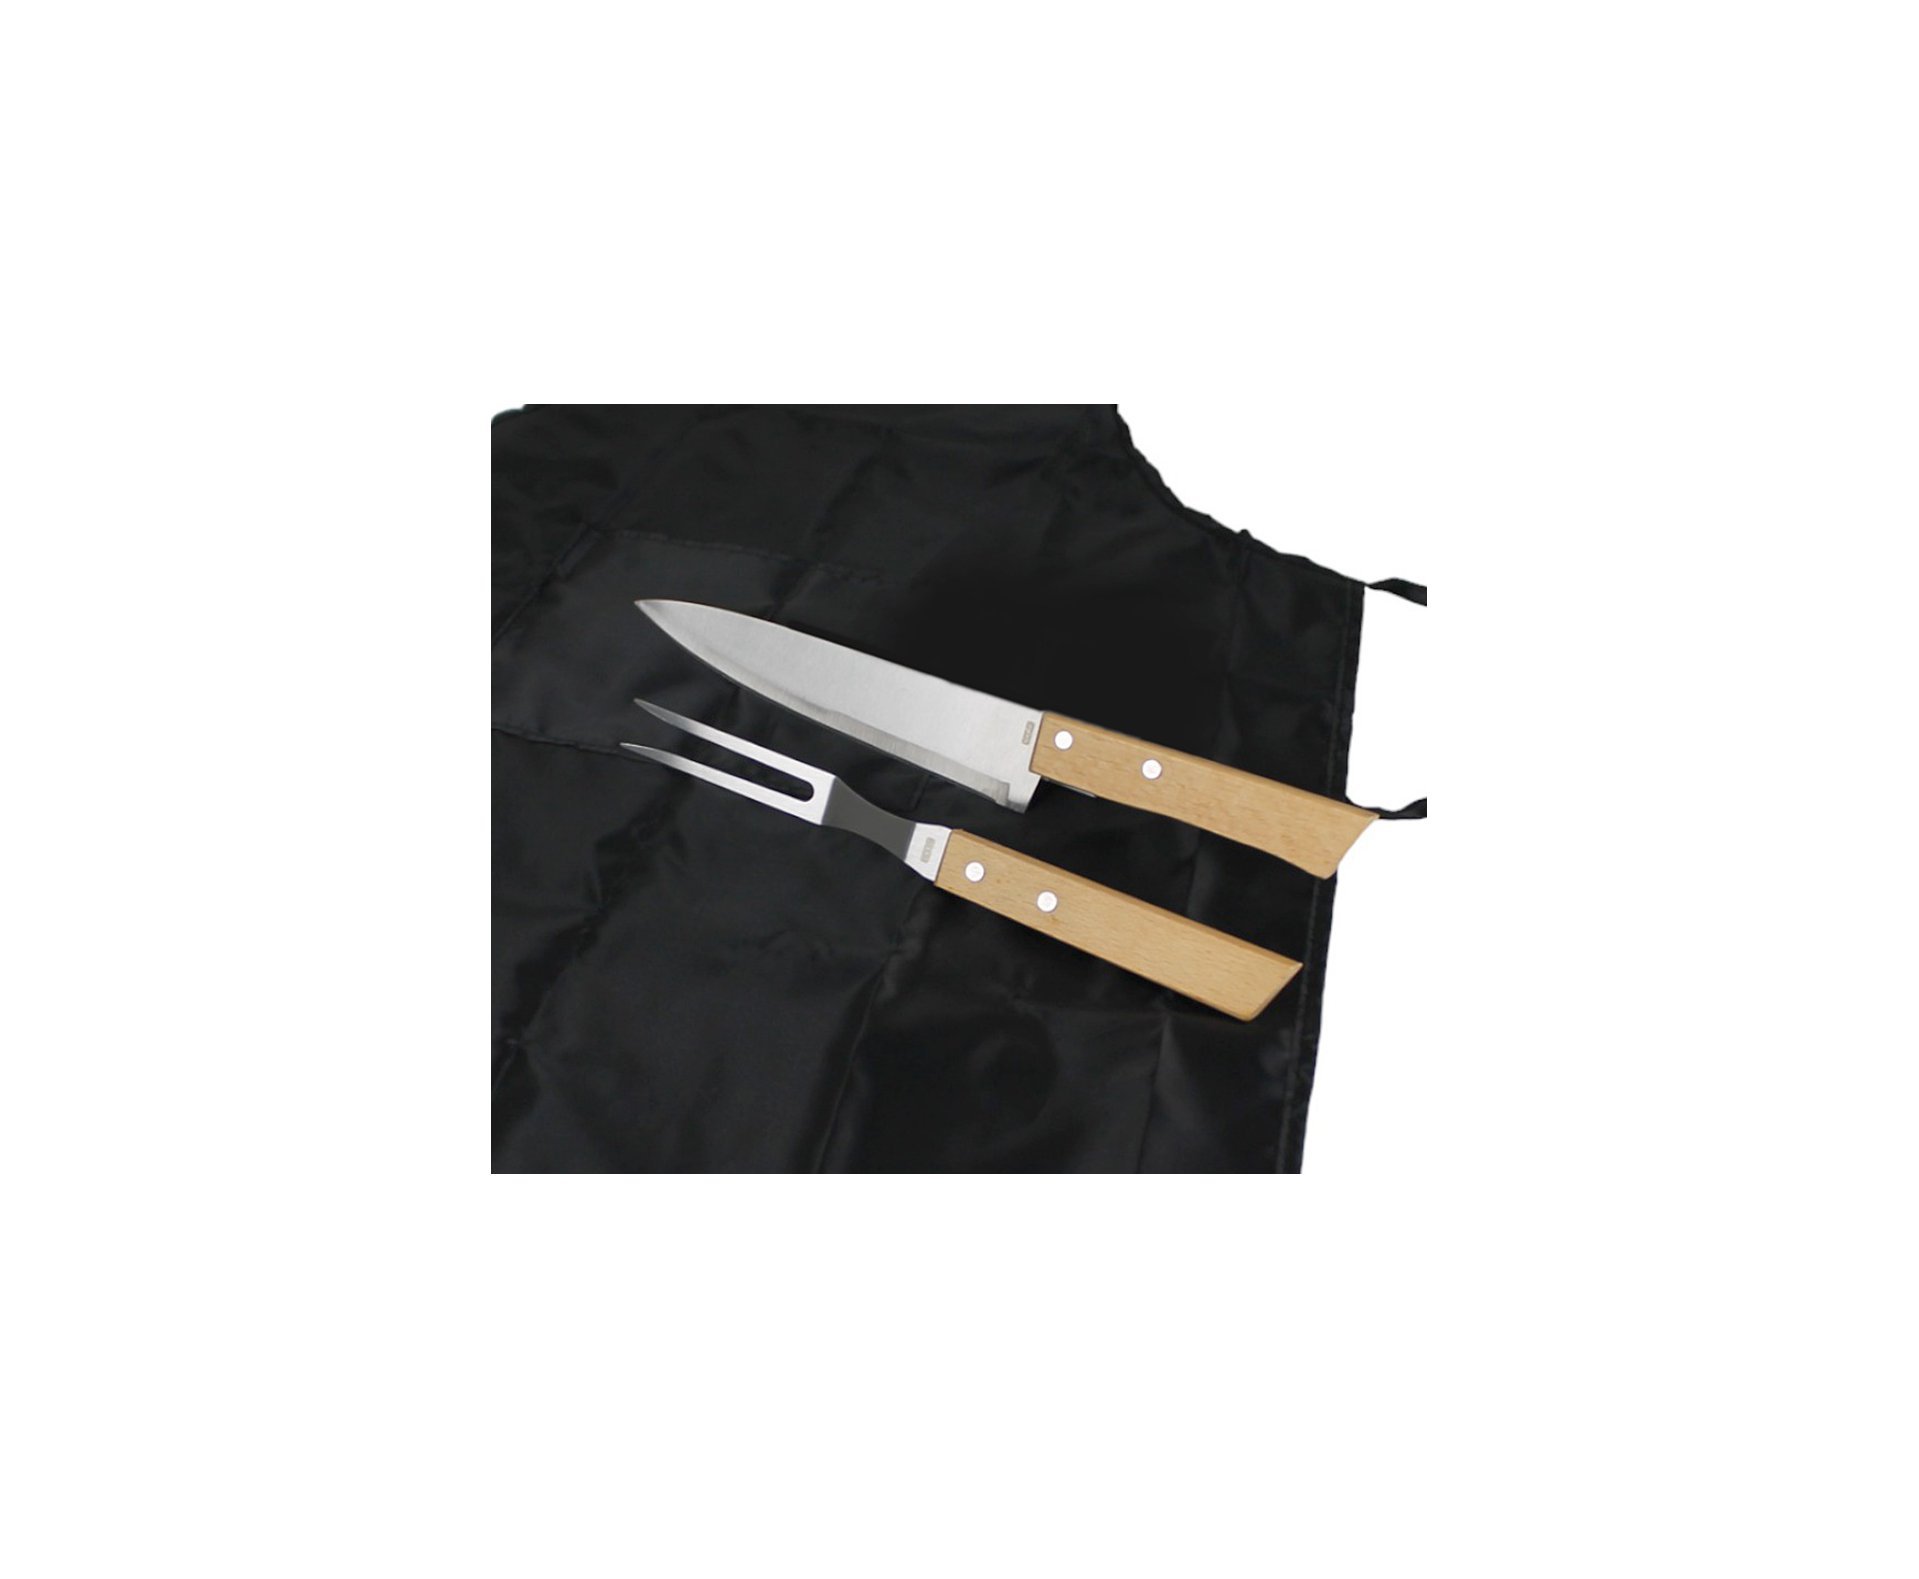 Kit Assador com avental, faca e garfo Fix Ud 3101- Fixxar